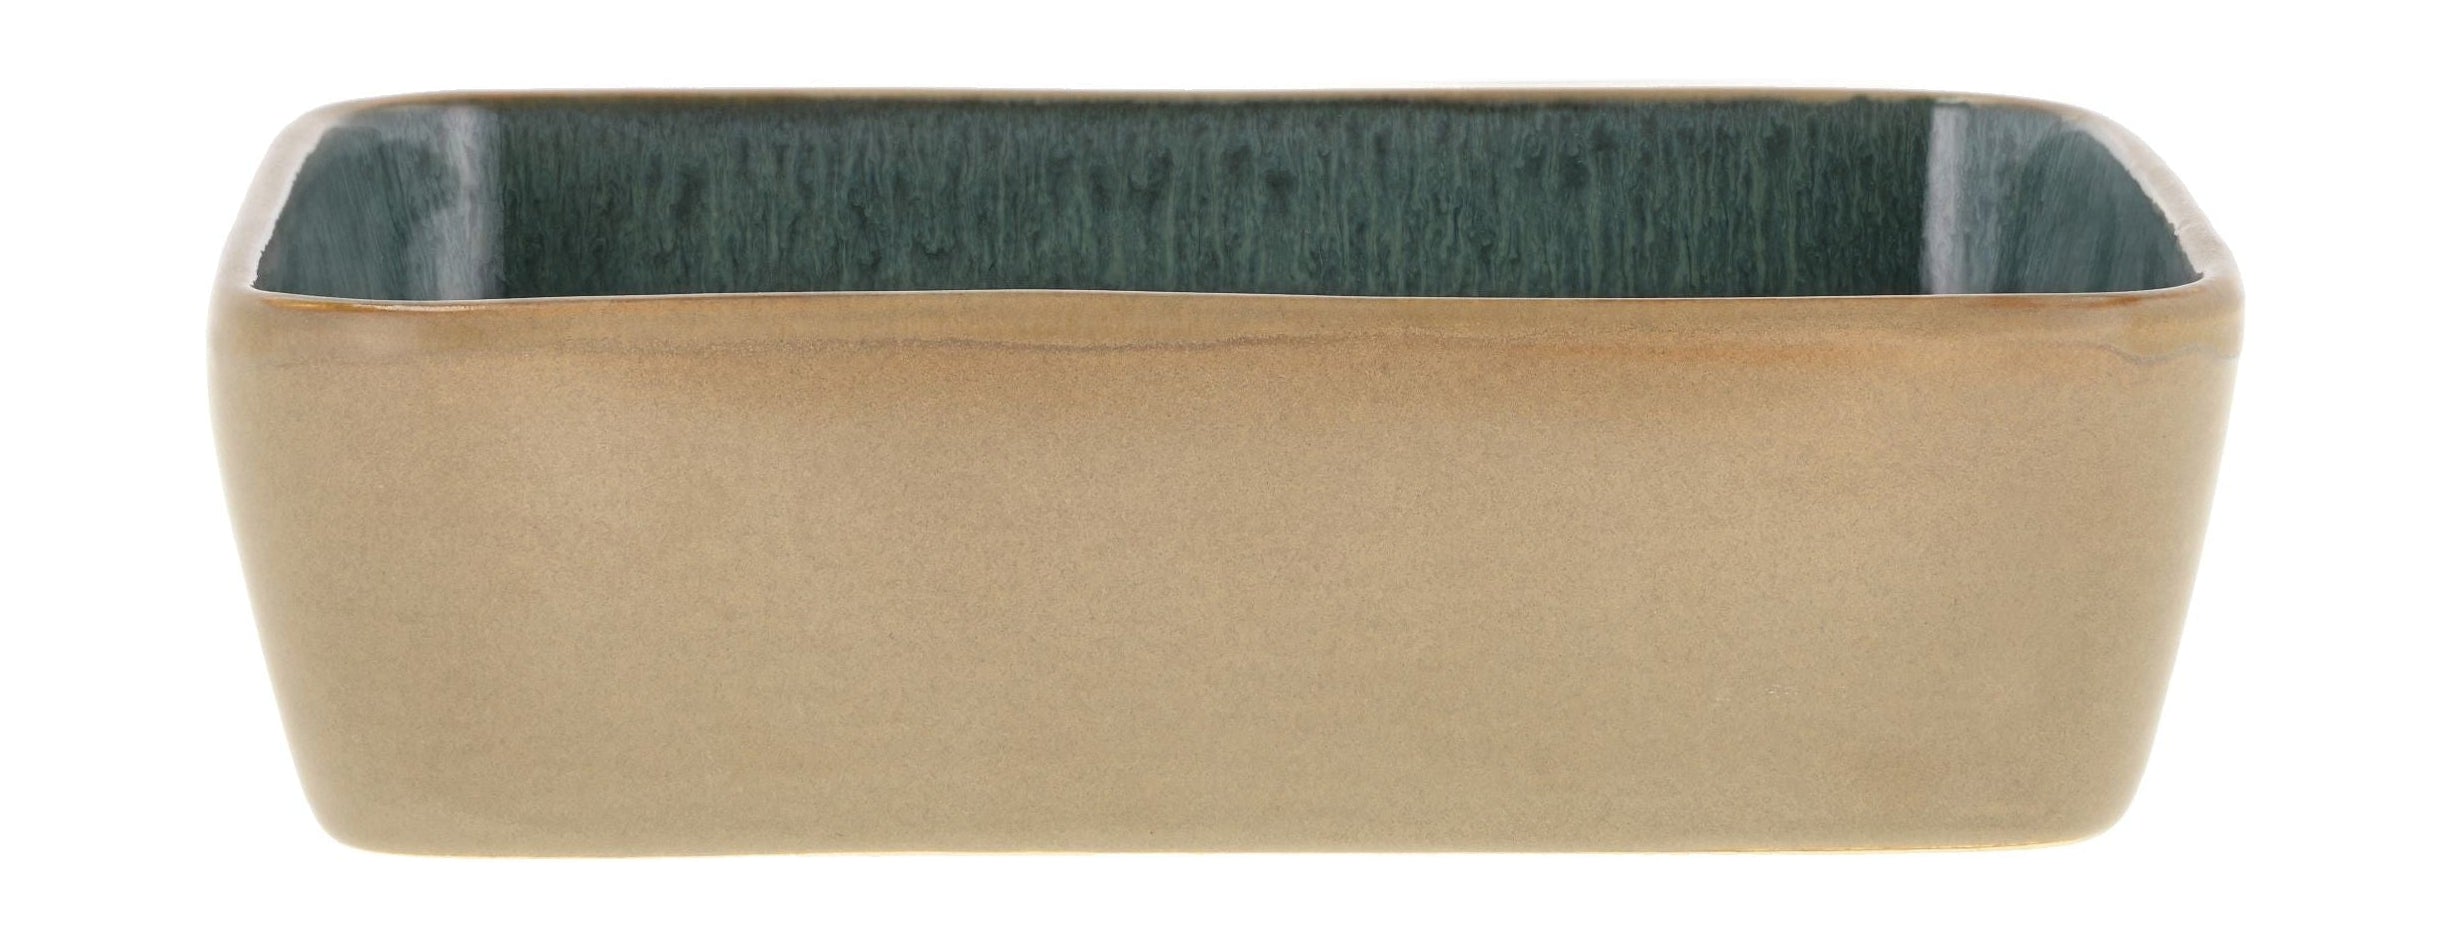 Bitz plato rectangular 19 x 14 x 5.3 cm, madera/bosque